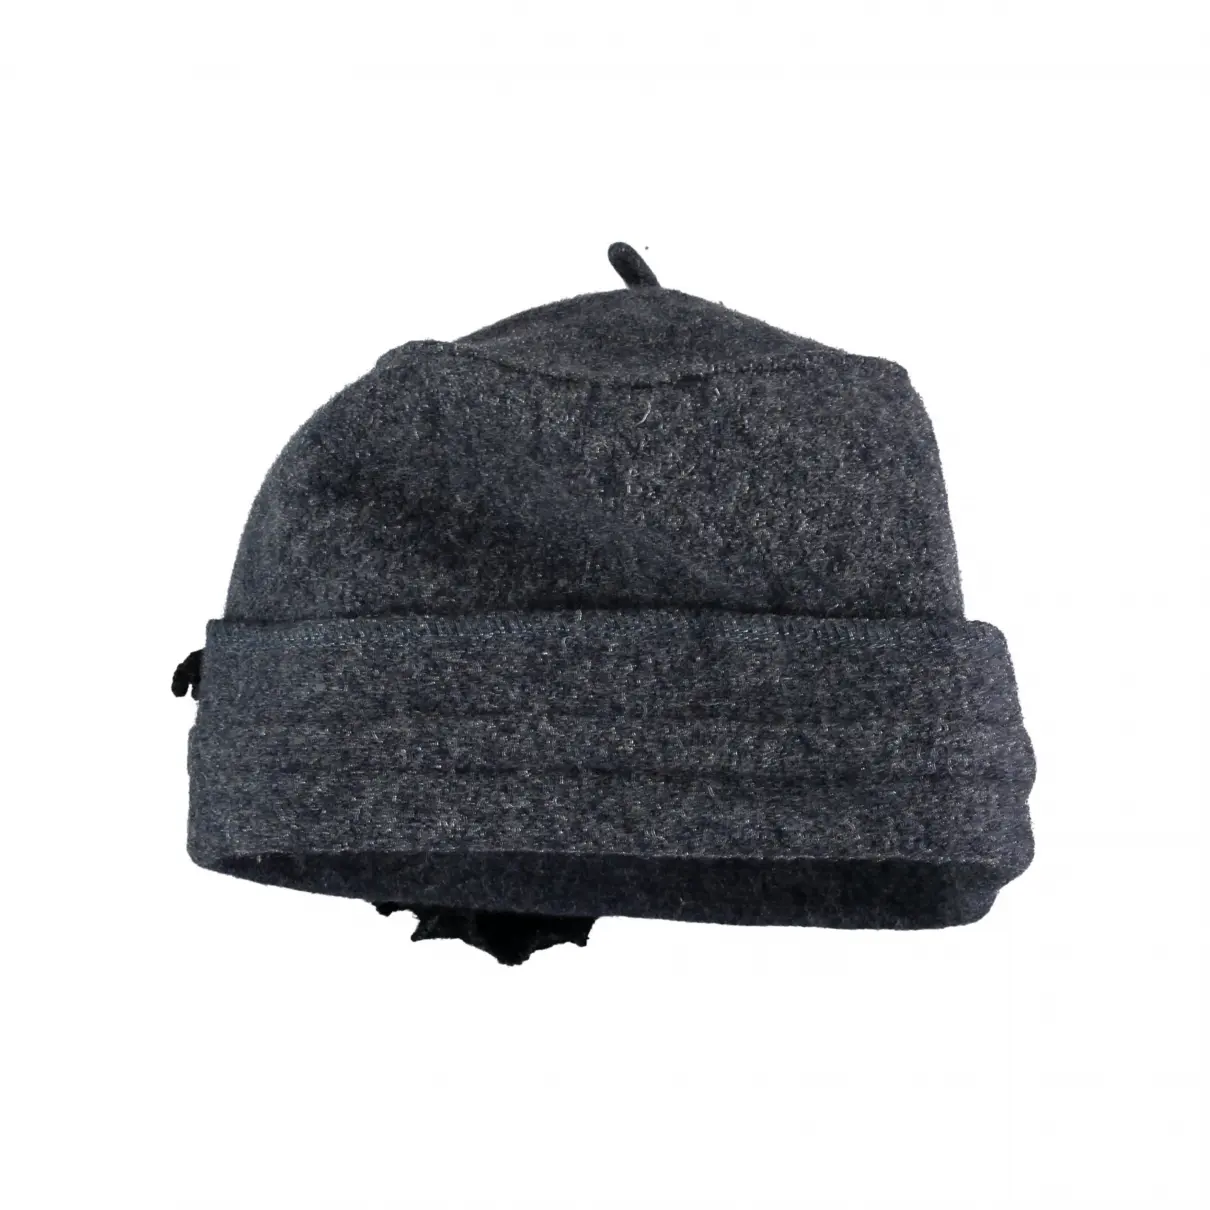 Buy Coccinelle Wool hat online